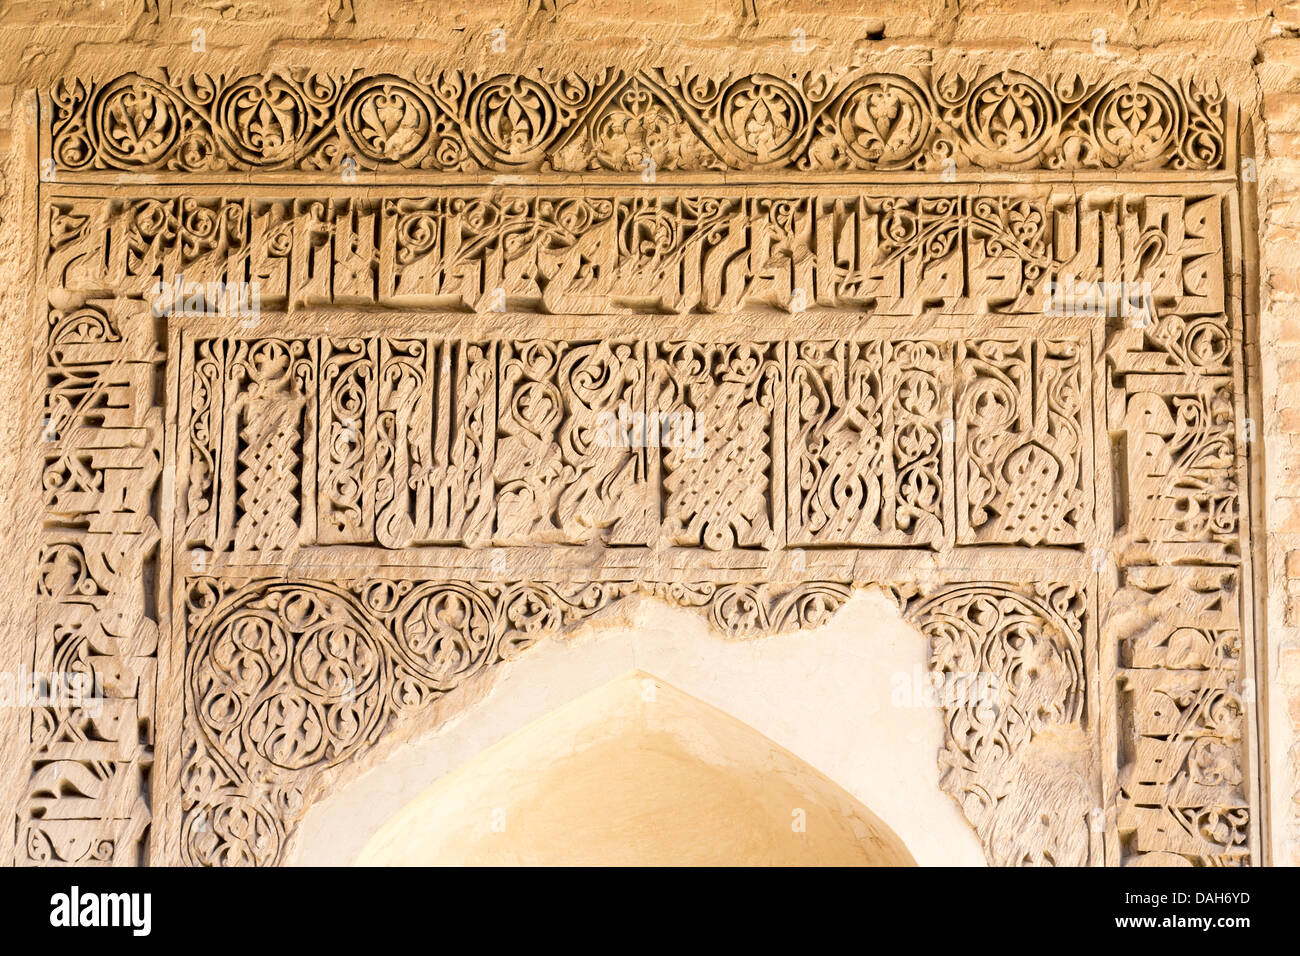 Dettaglio del mihrab in stucco, Robat-i caravanserai Sharaf, Khorasan, Iran Foto Stock